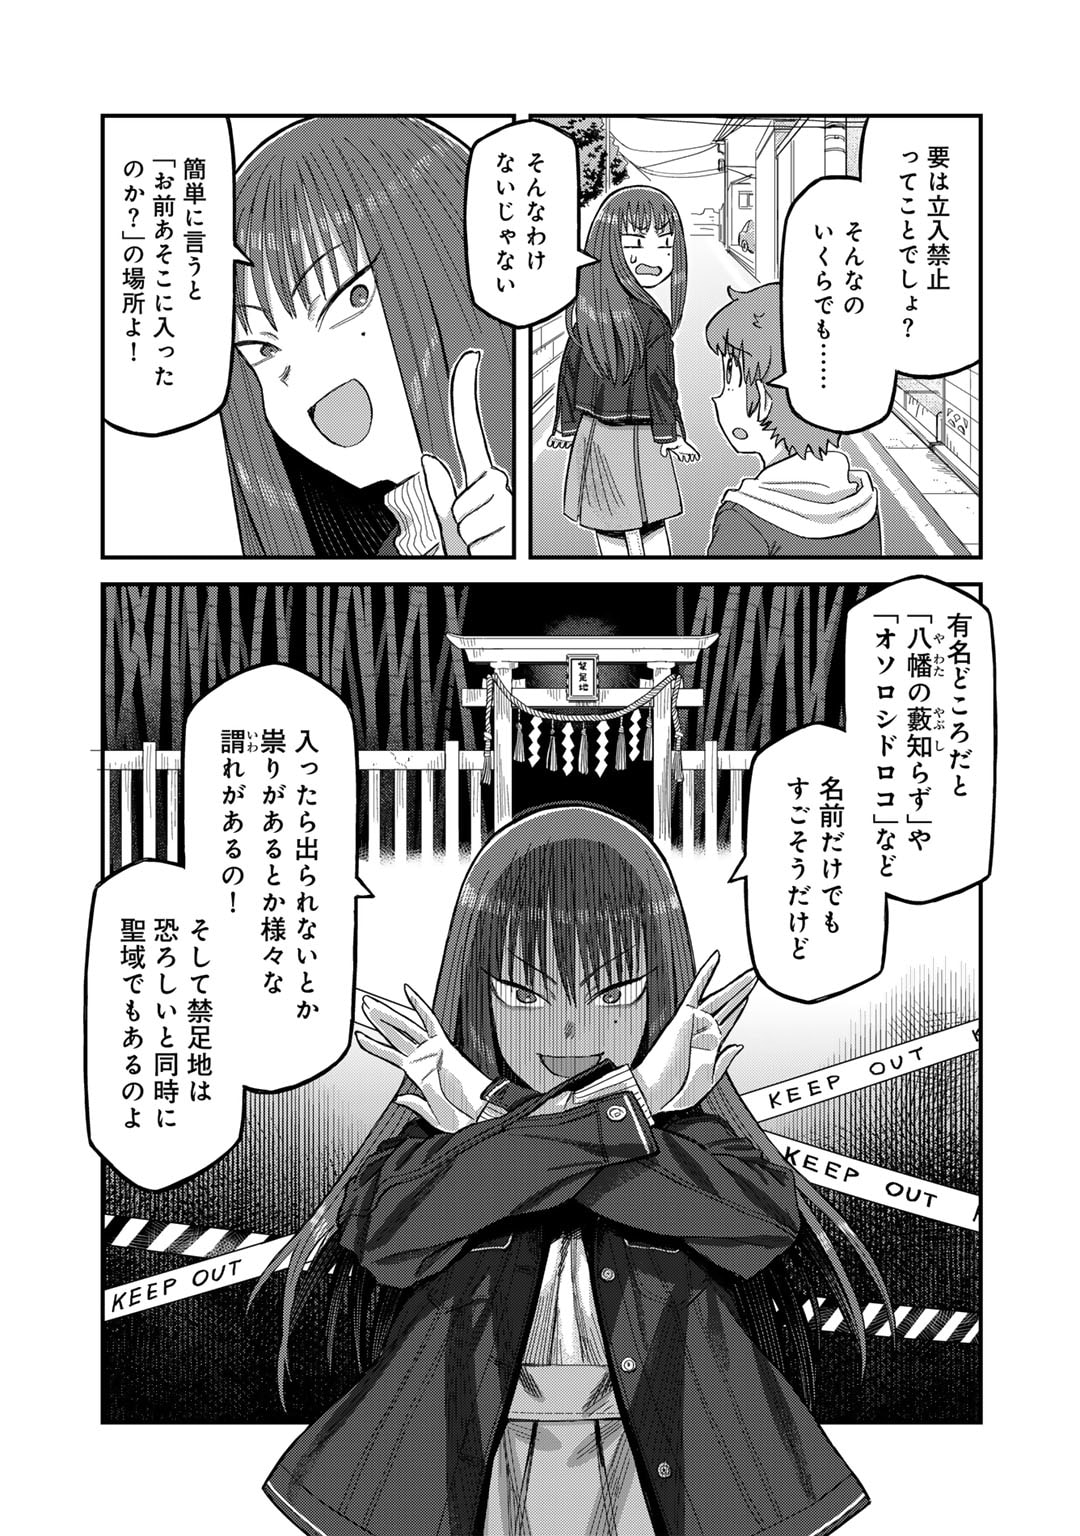 Kurono-san wa Occult ga Suki! - Chapter 2 - Page 3